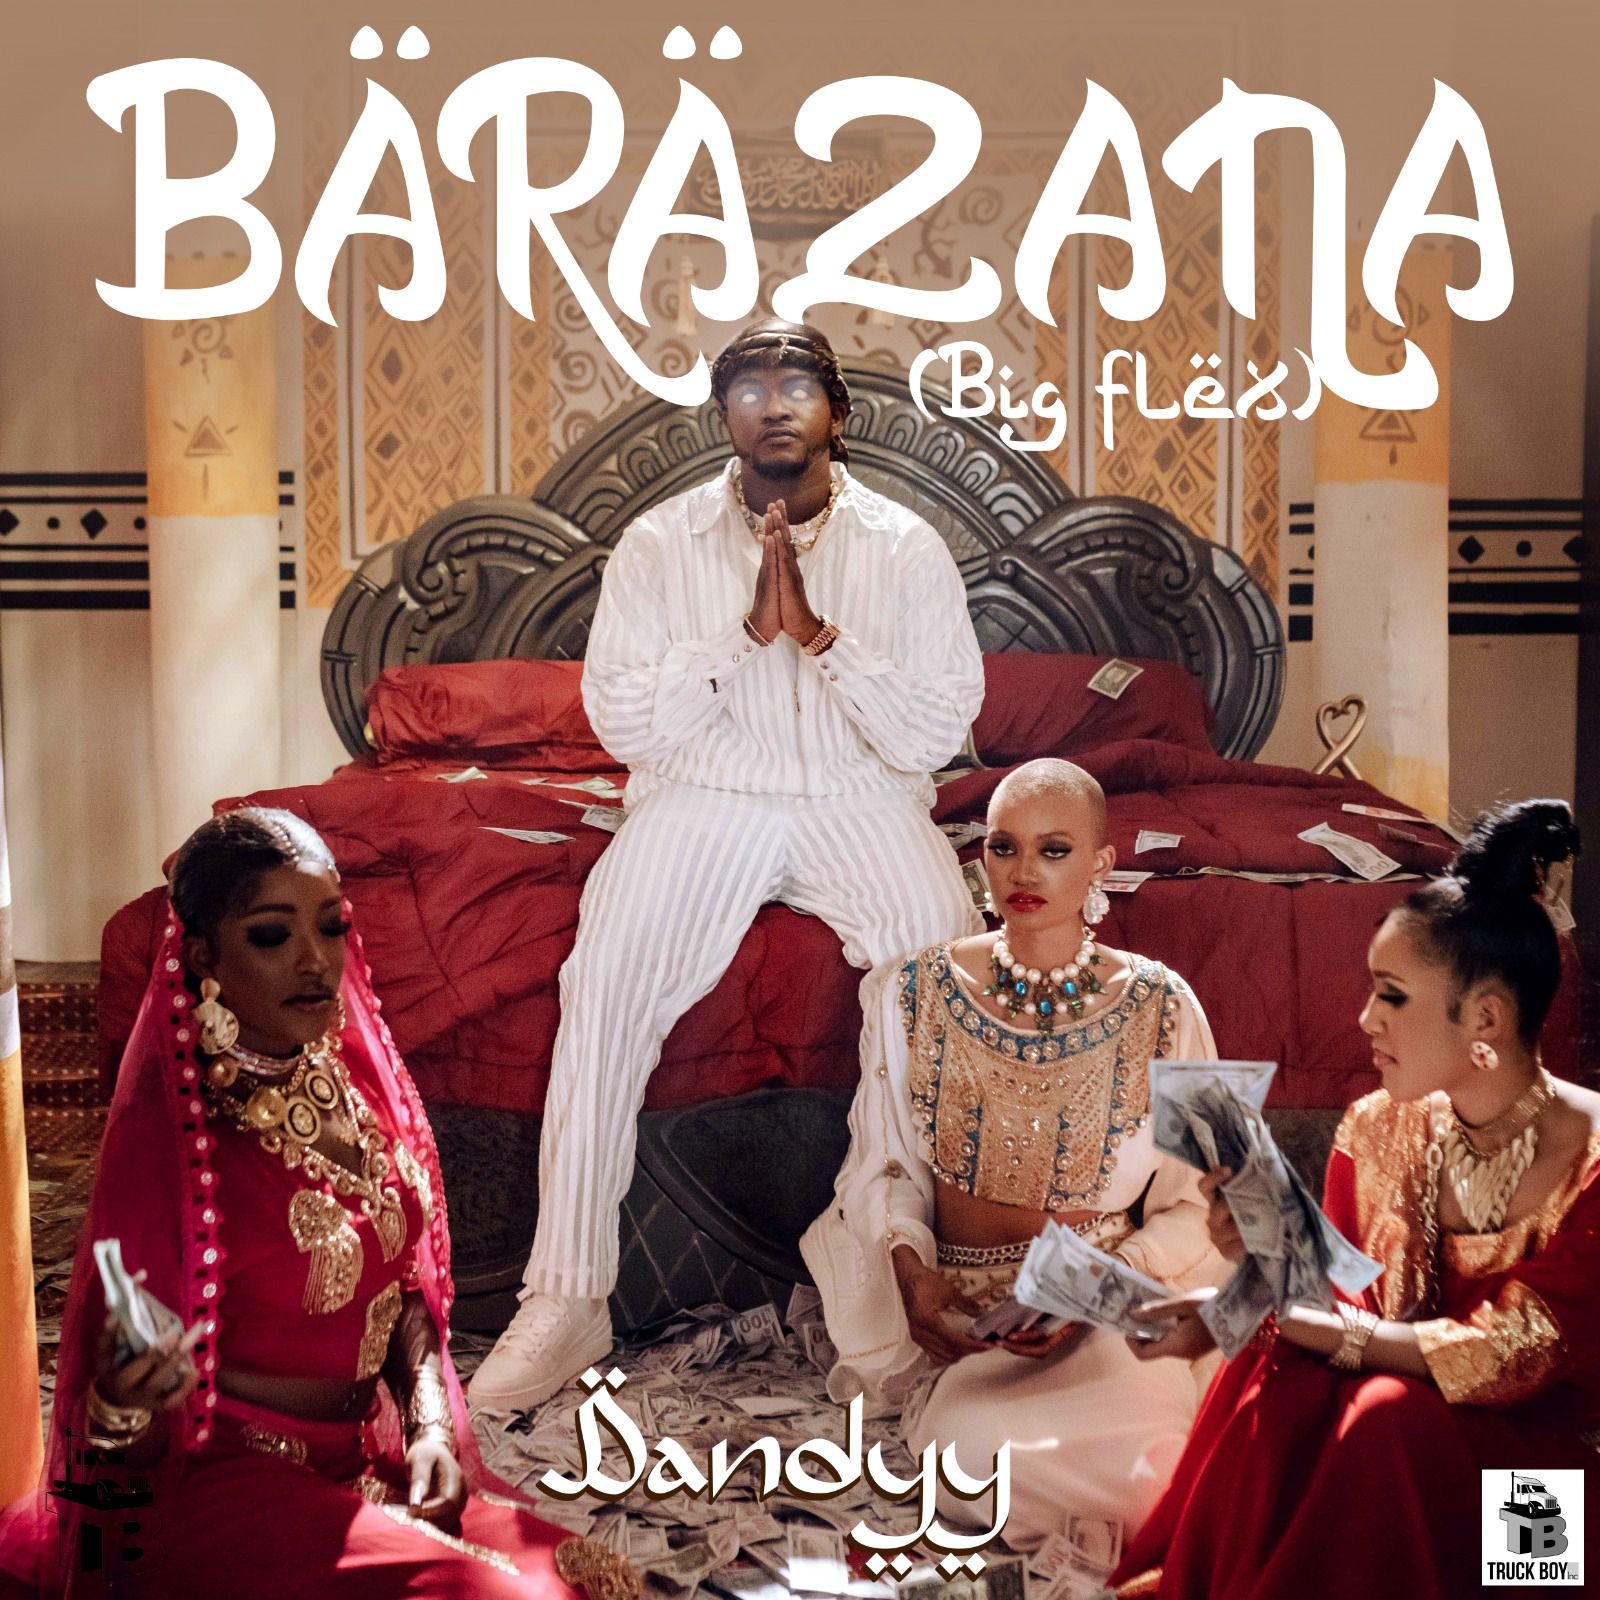 Dandyy - Barazana